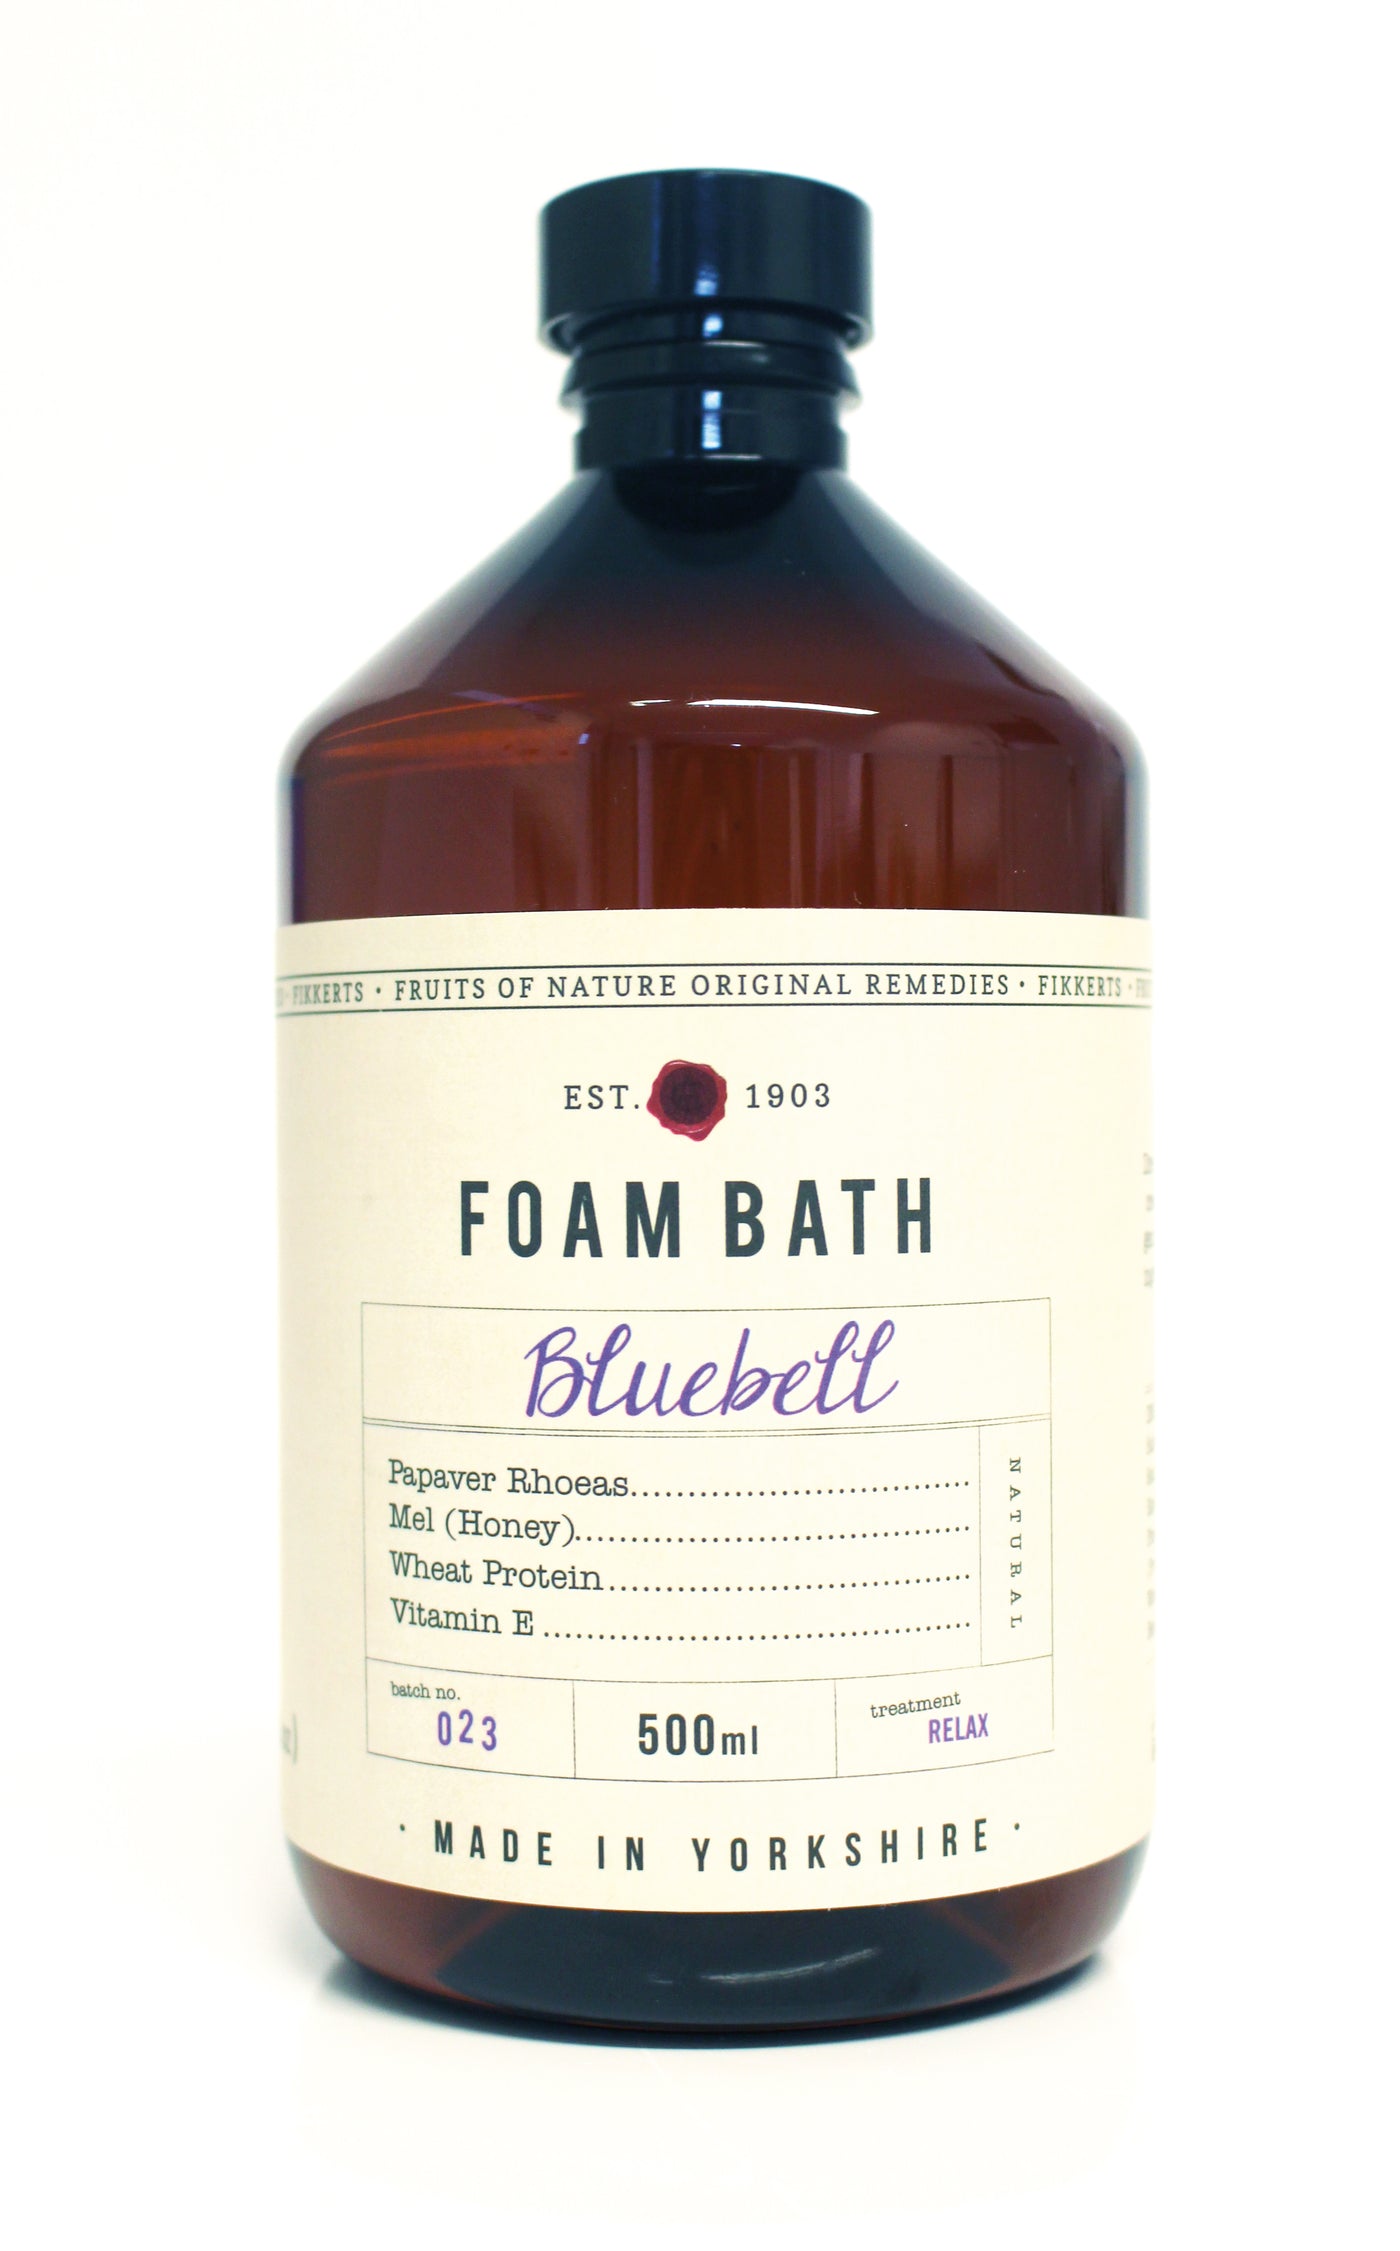 Bluebell foam bath